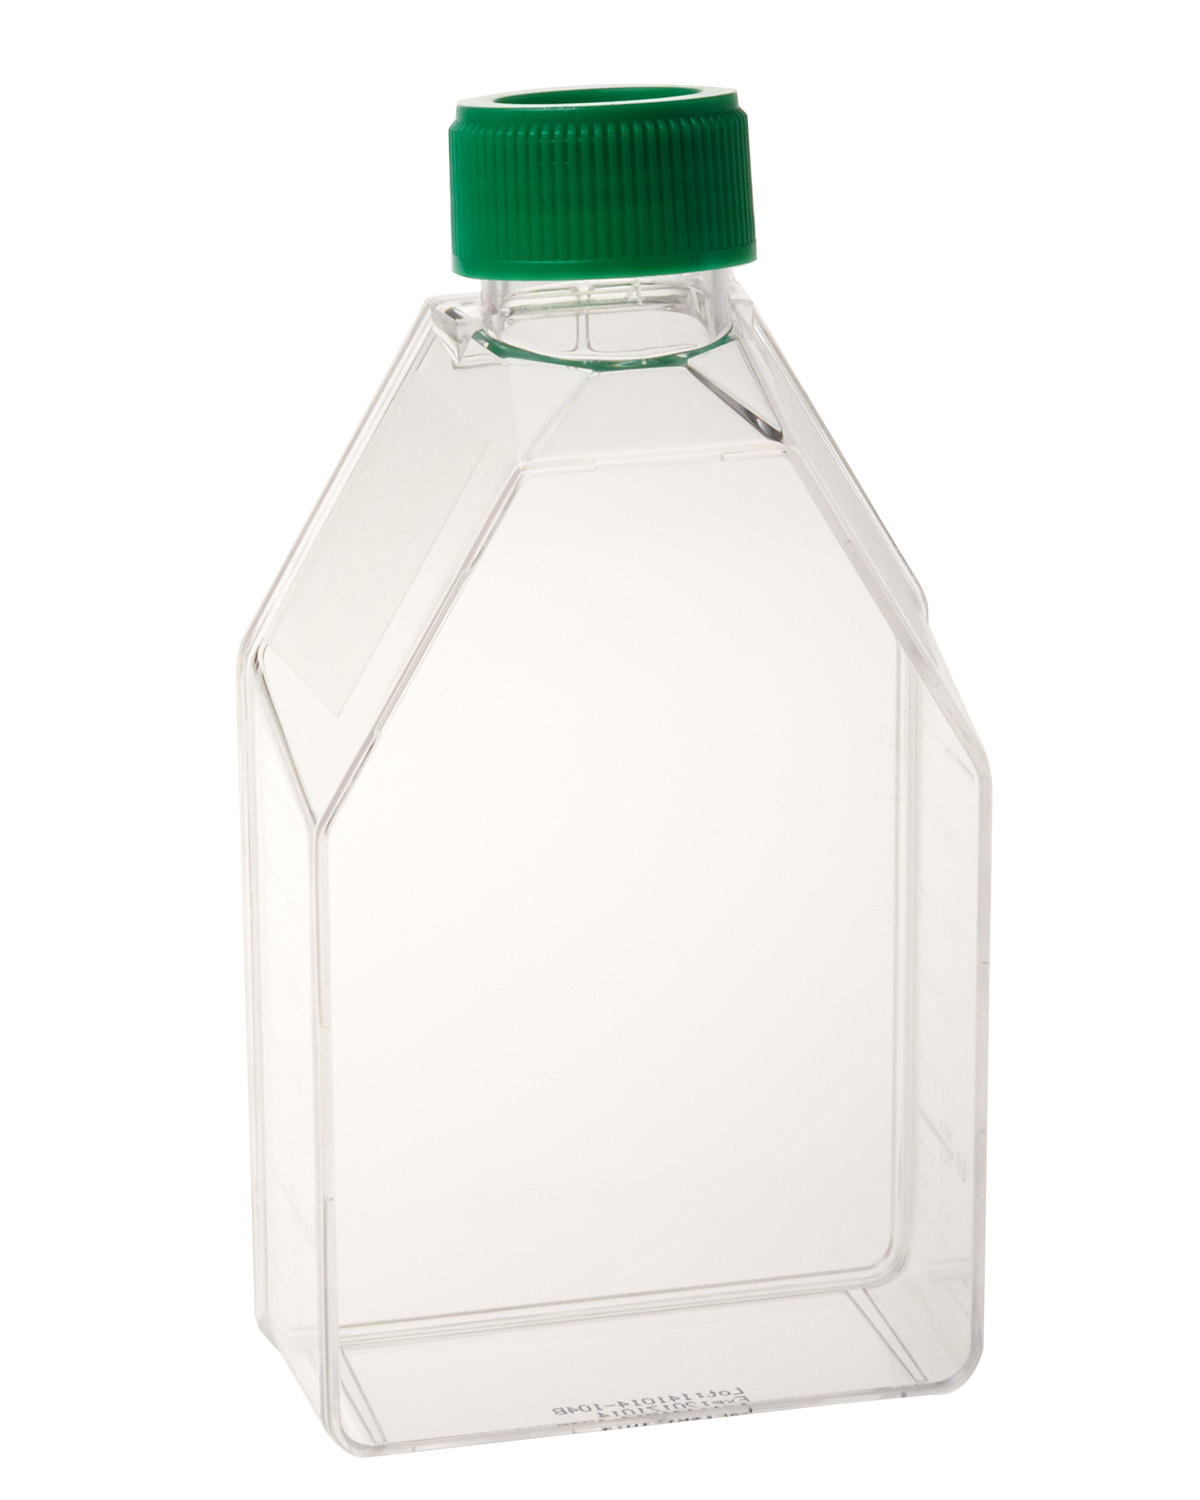 Flasks-Tissue Culture | 229341 • CELLTREAT Scientific Products